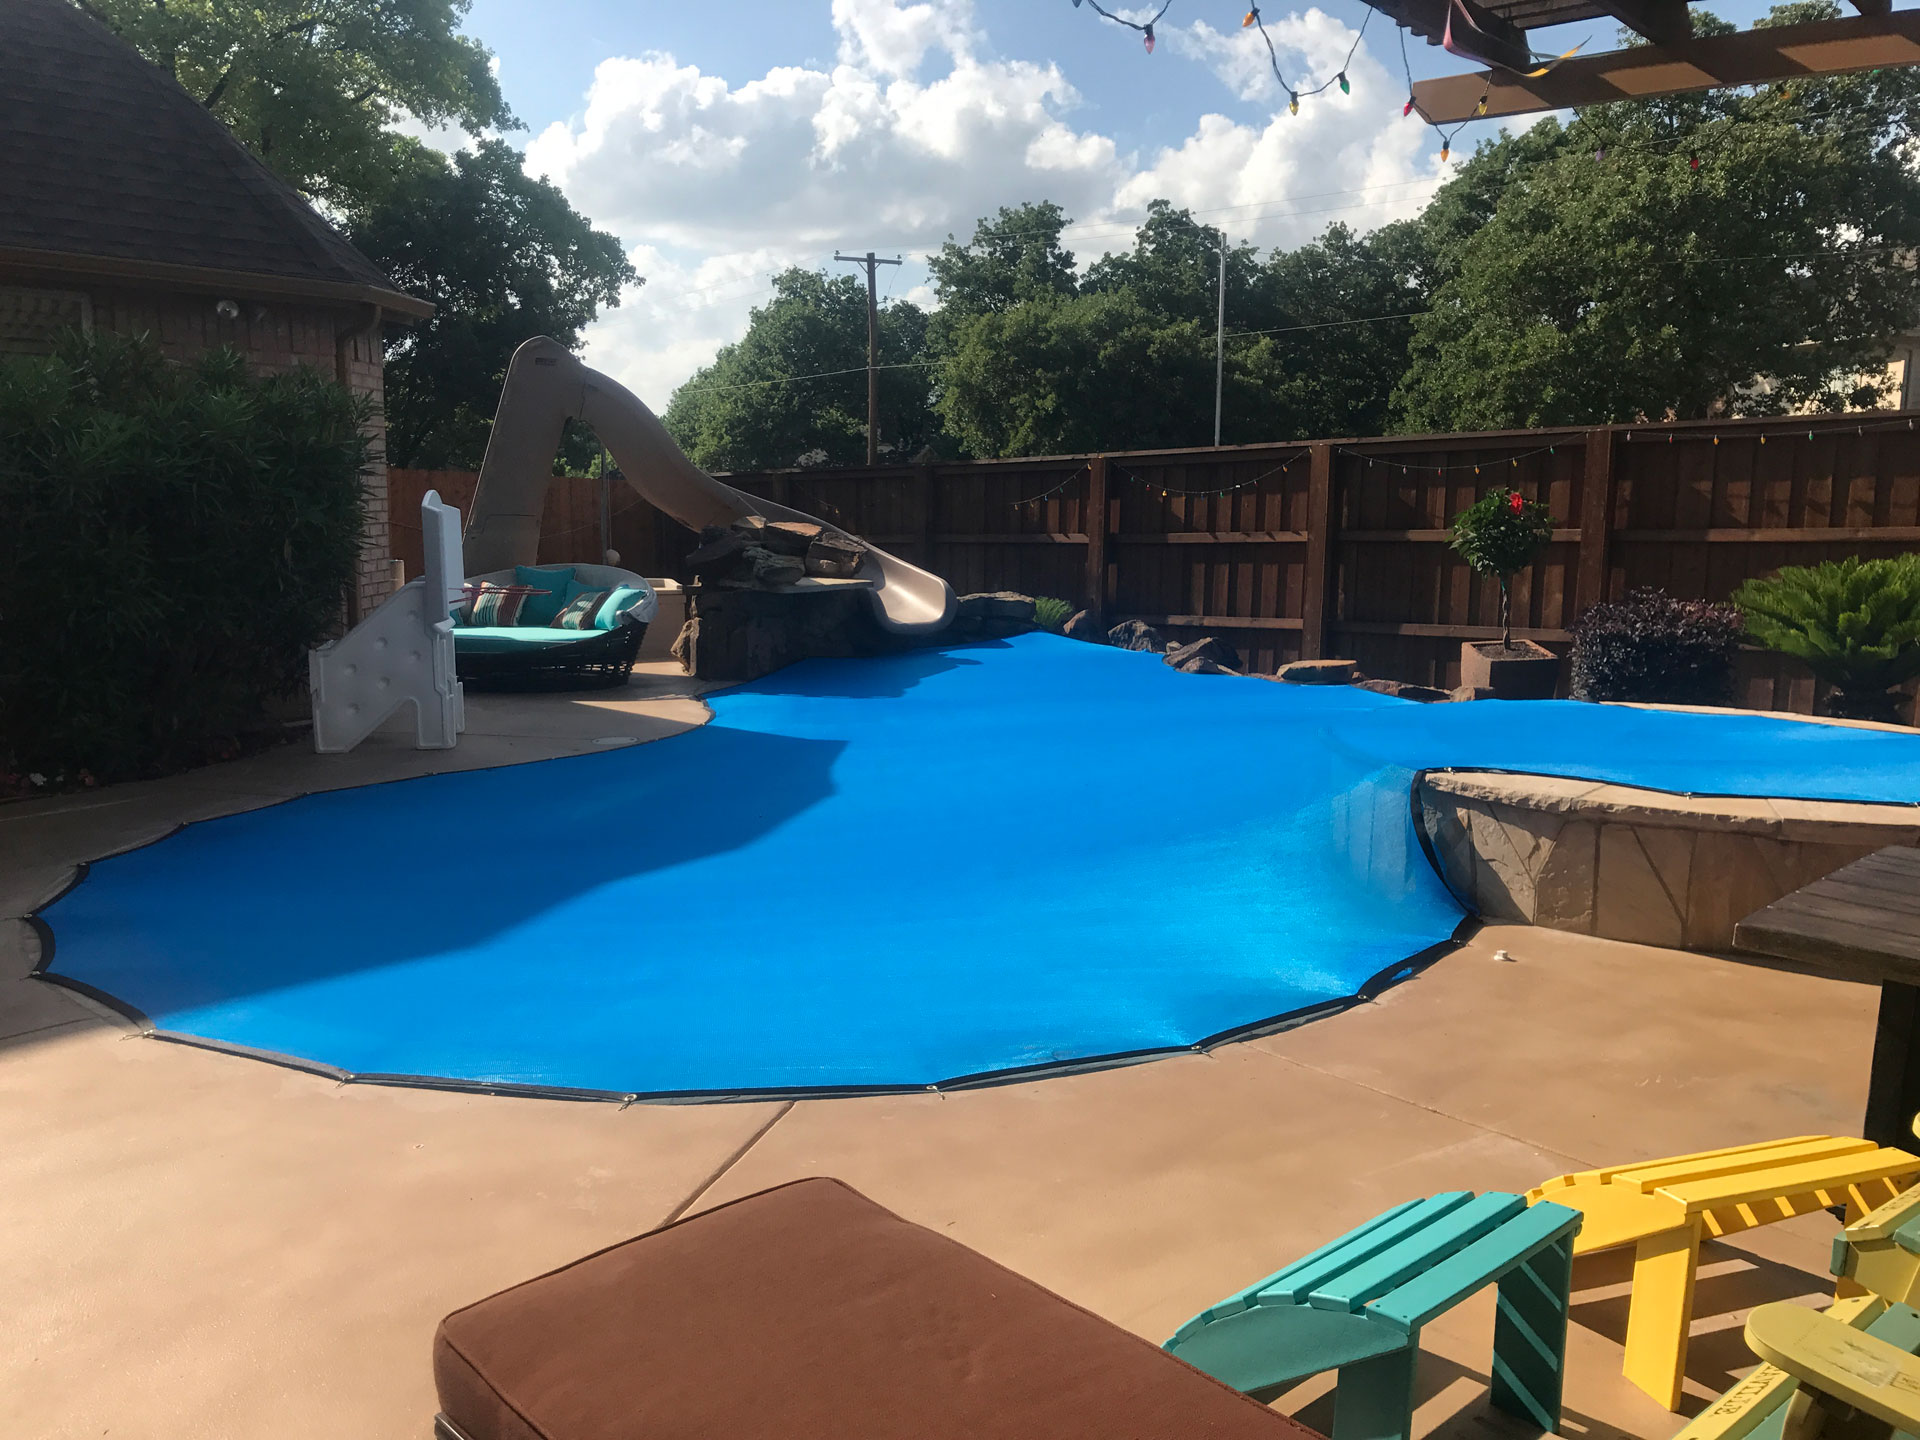 Blue winter pool covers inground